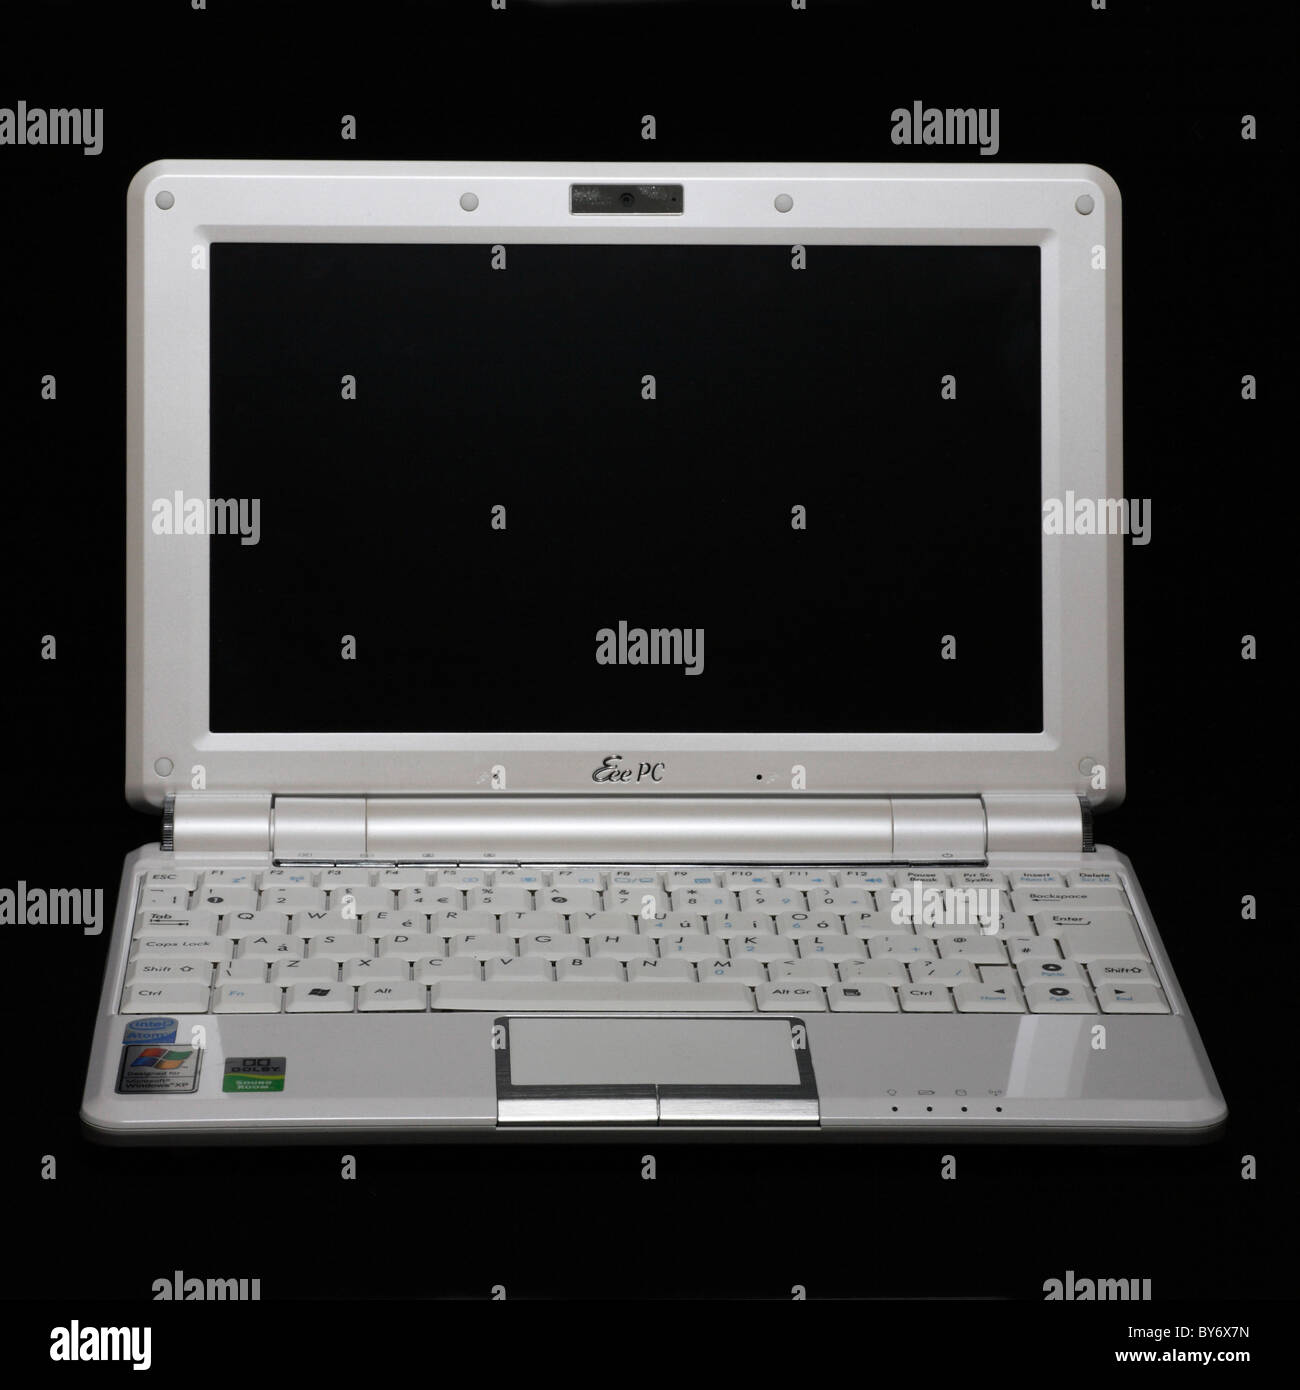 White Asus Eeepc 10 inch screen windows netbook mini laptop computer PC  isolated on black Stock Photo - Alamy